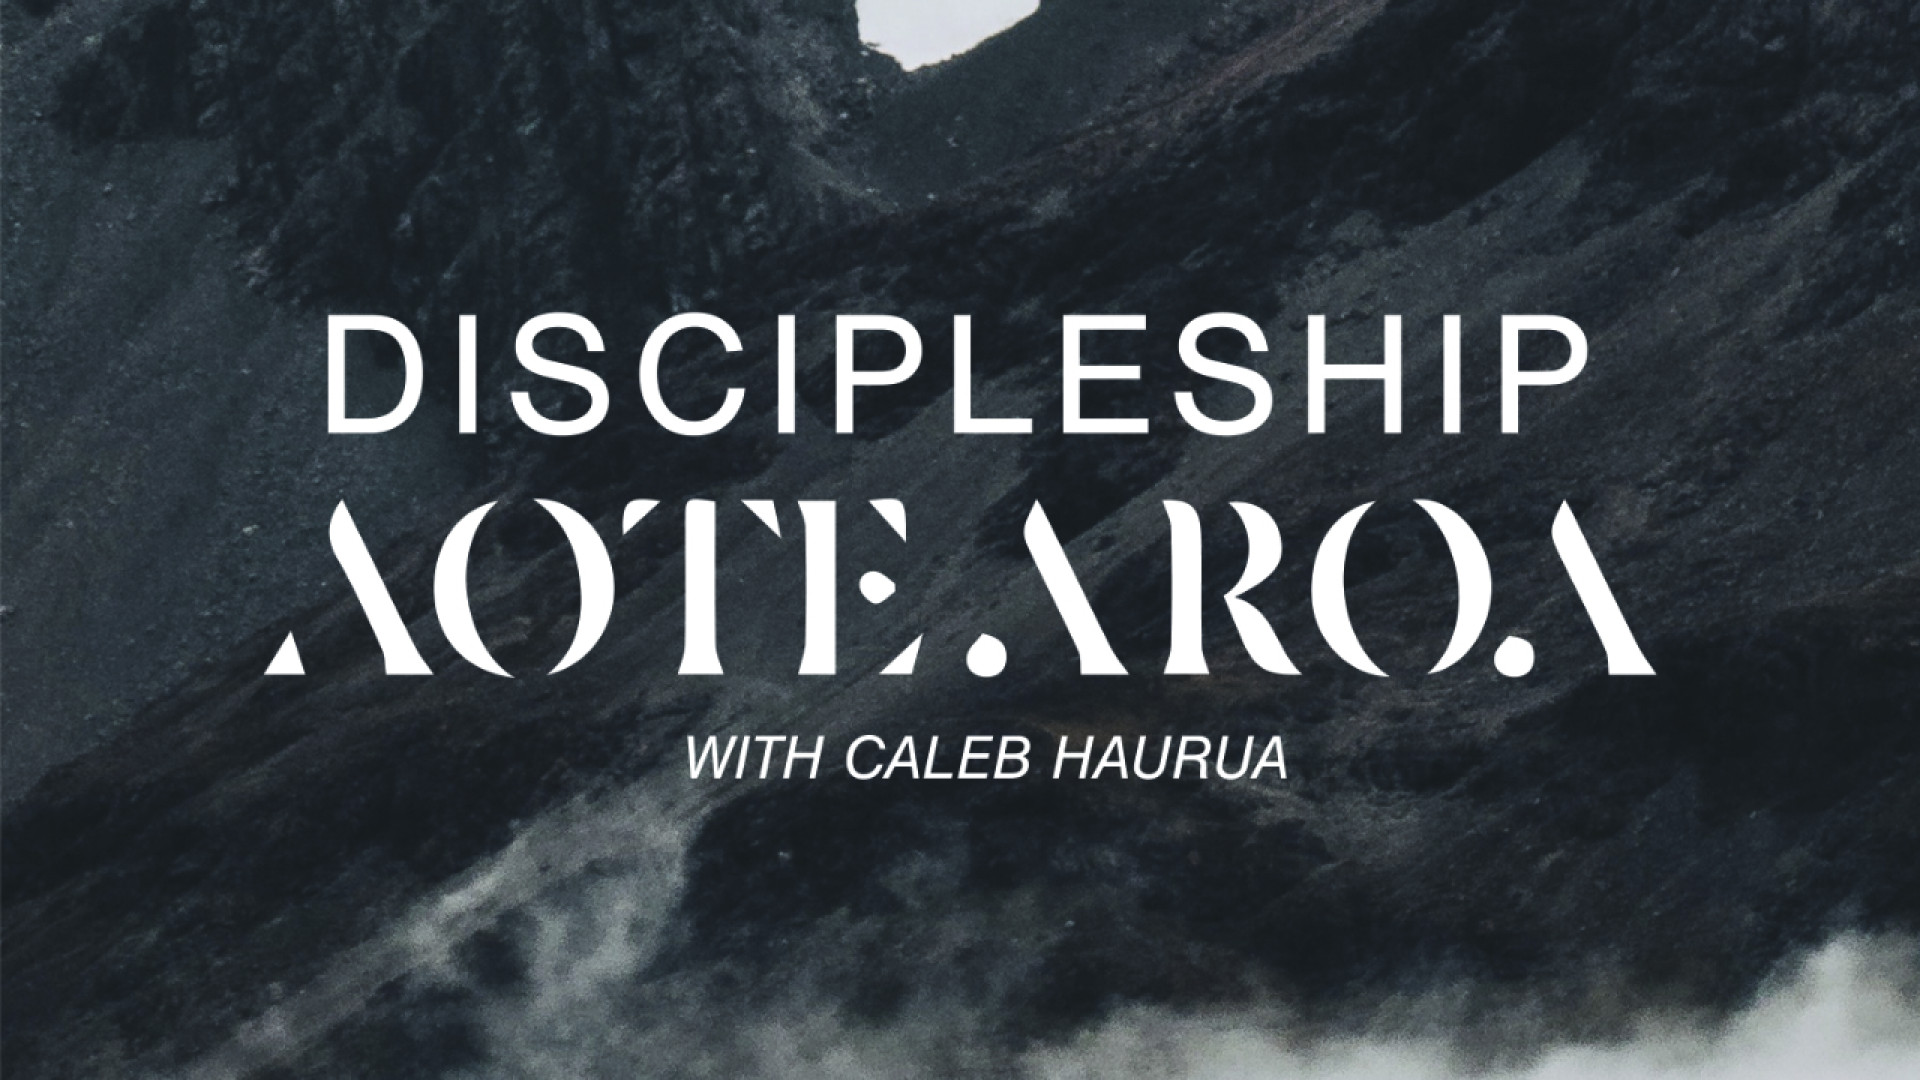 Introducing Discipleship Aotearoa Image